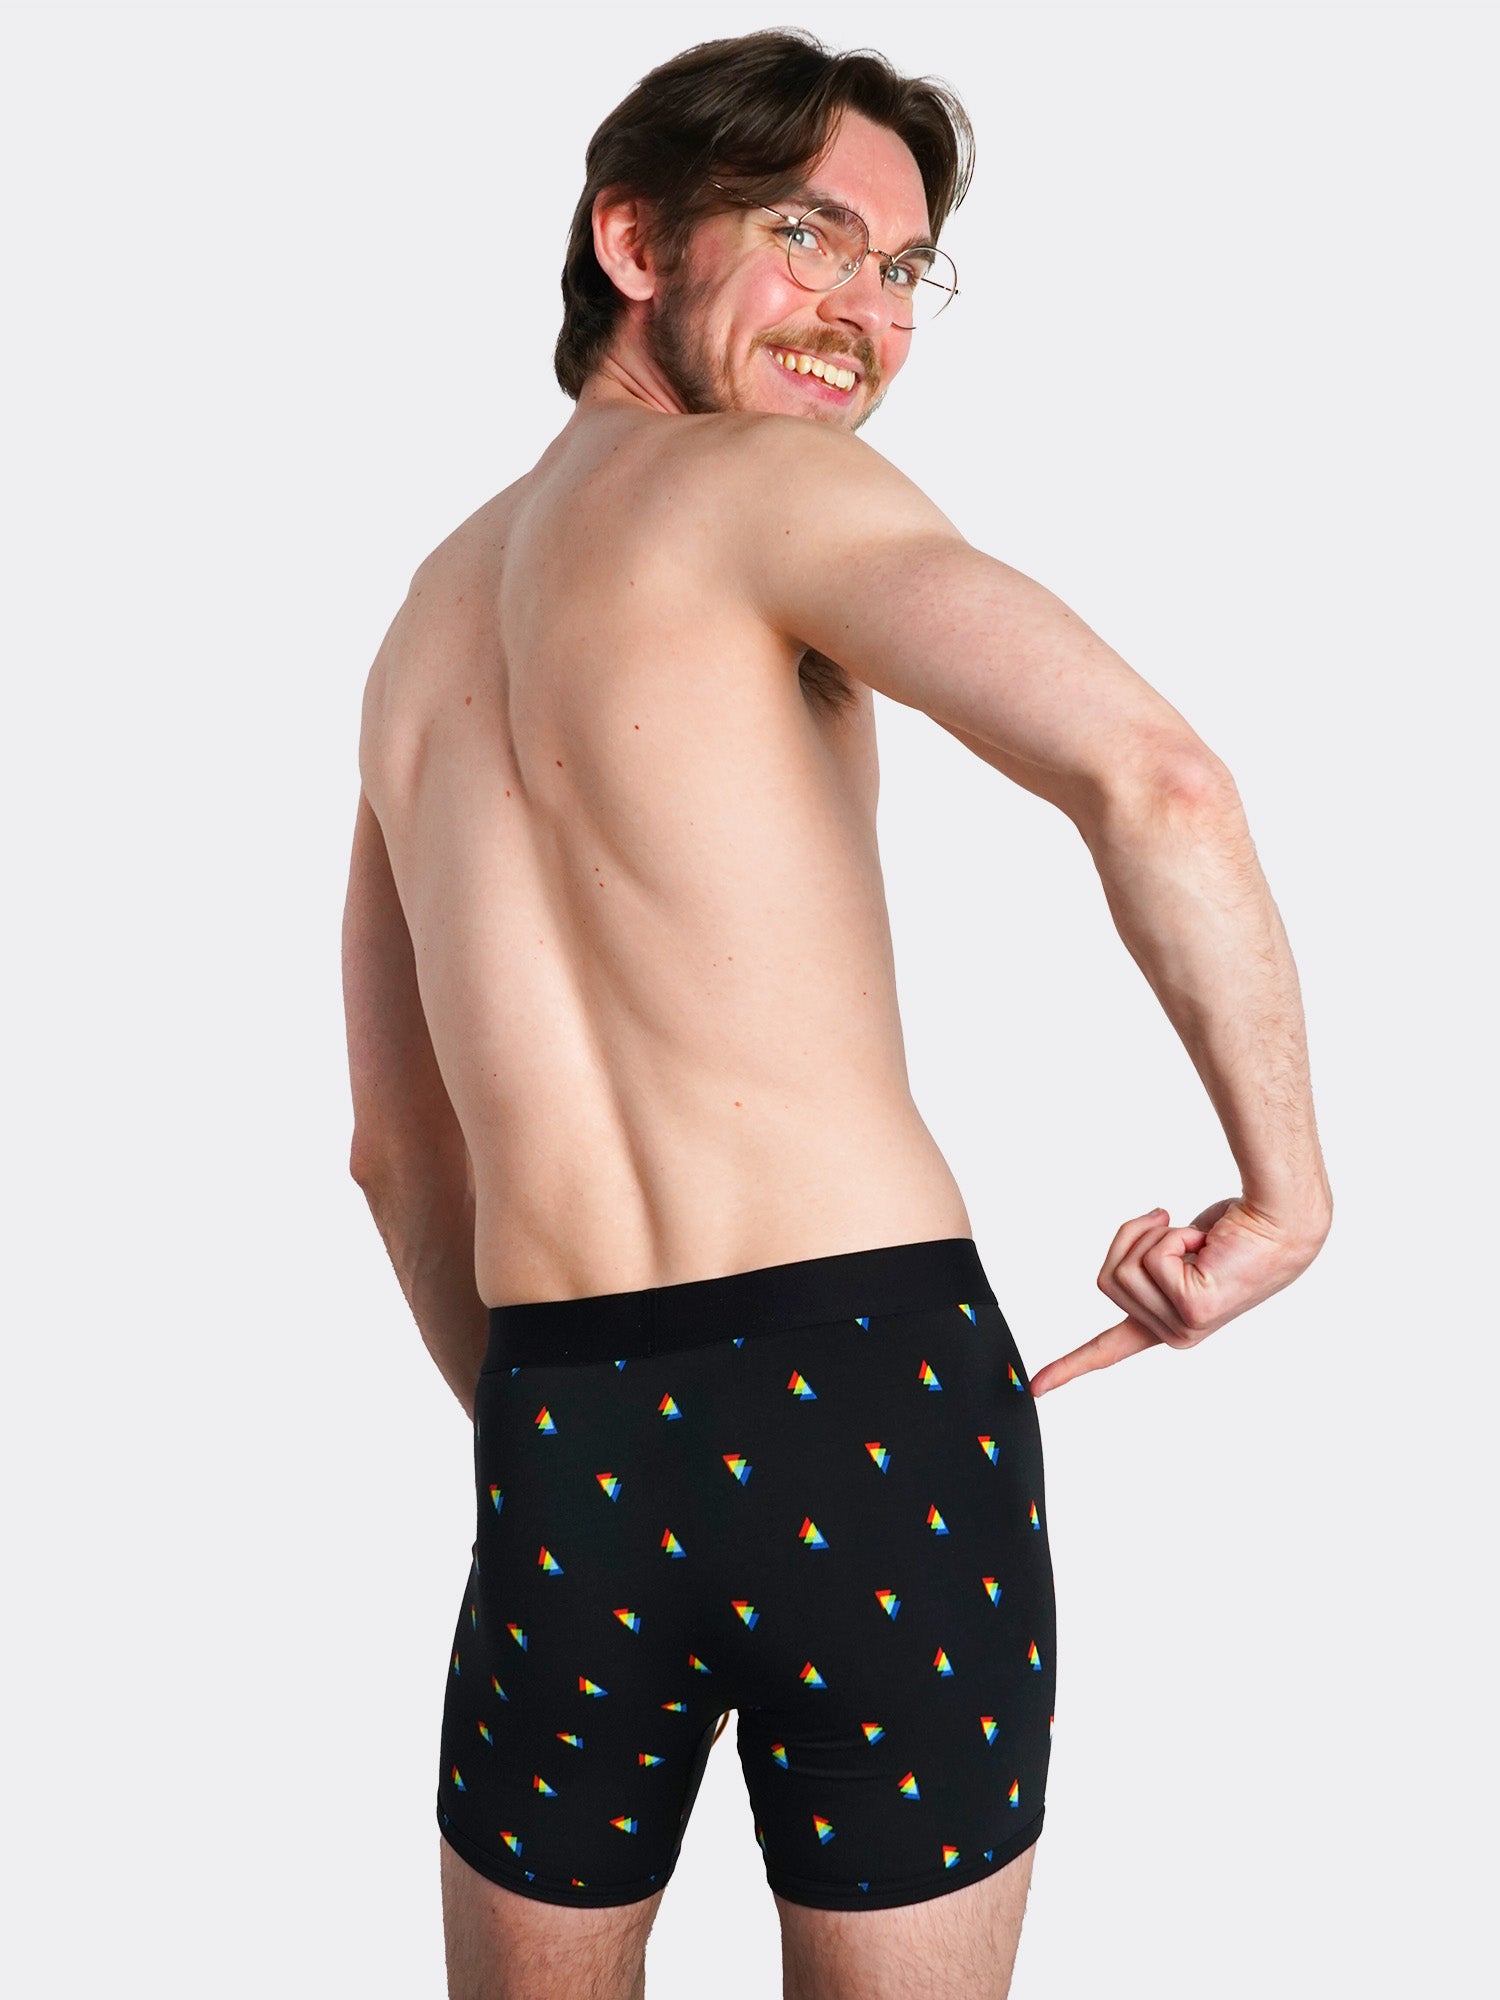 Coming soon: LTT Underwear for ladies! : r/LinusTechTips